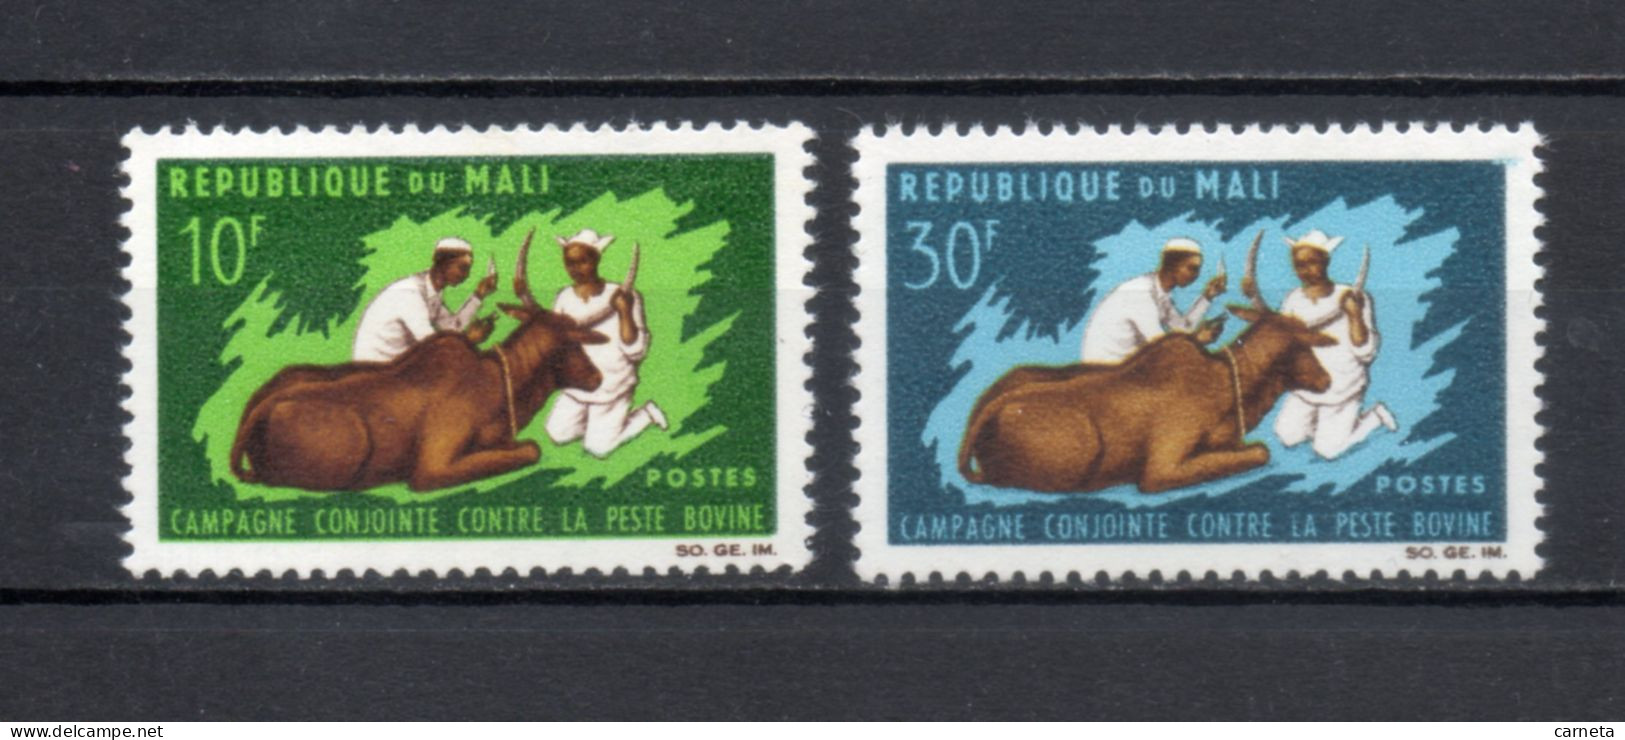 MALI  N° 98 + 99   NEUFS SANS CHARNIERE  COTE 2.00€    ELEVAGE  PESTE BOVINE  ANIMAUX - Mali (1959-...)